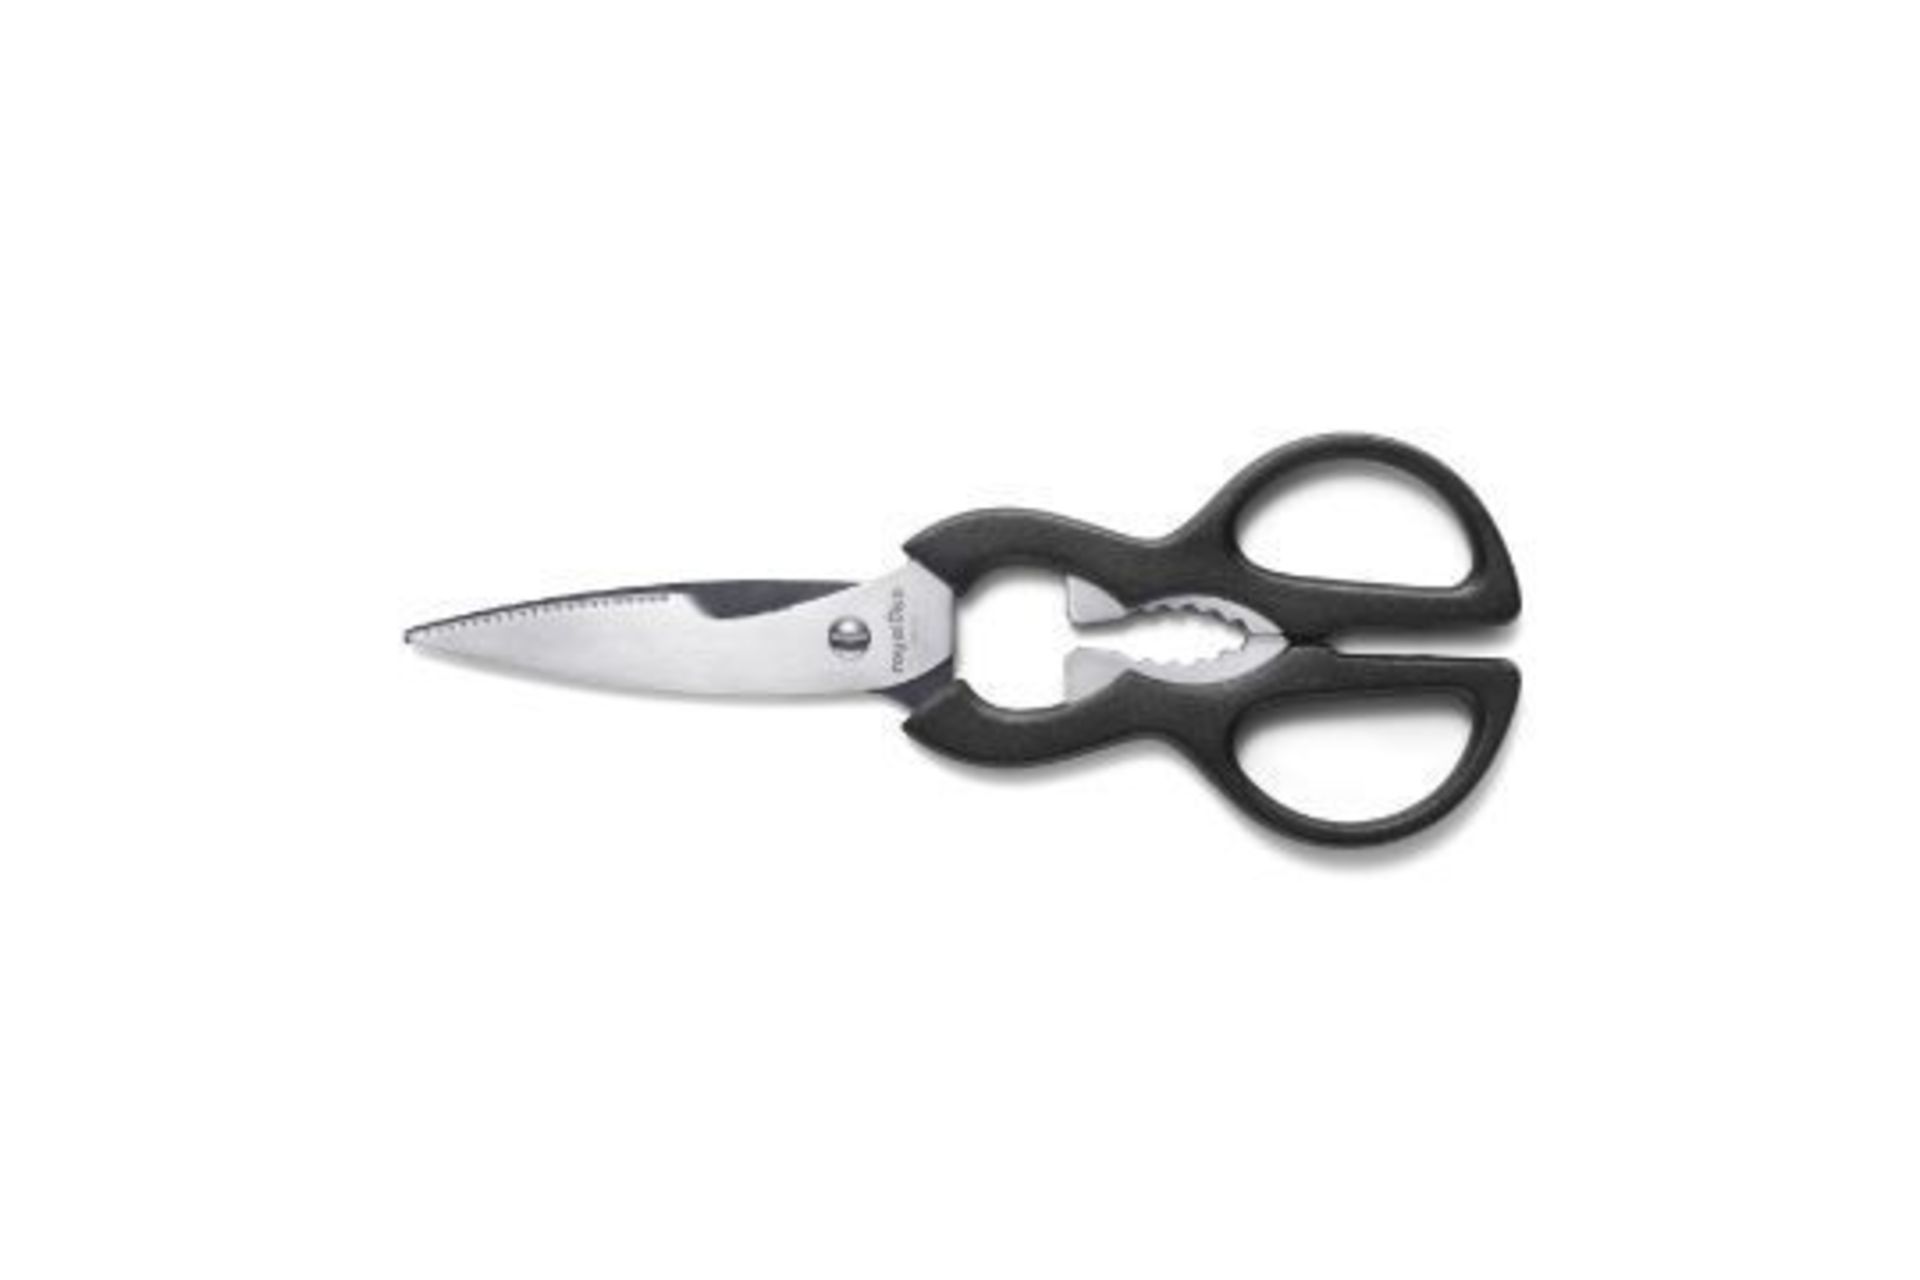 New Royal VKB Multipurpose Kitchen Scissors - RRP £8.49. - Image 2 of 2